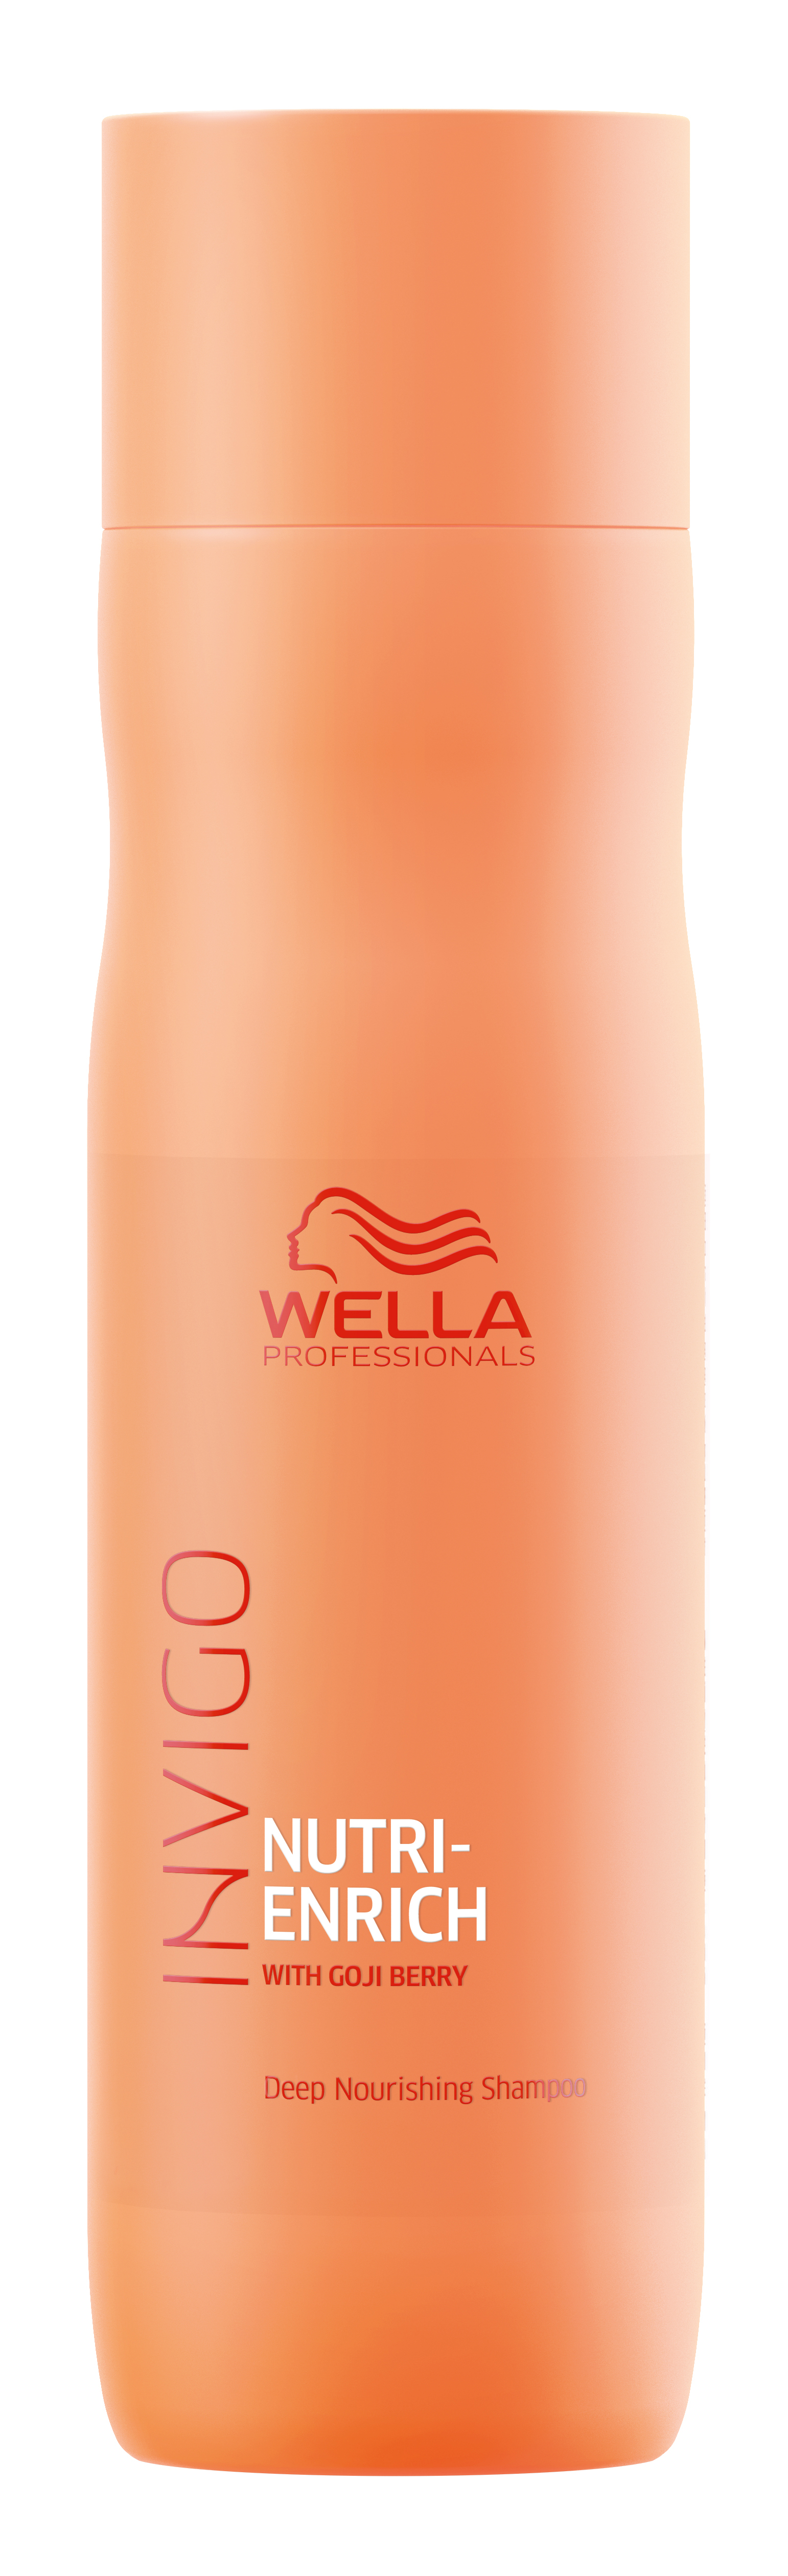 33.8 oz Wella Pro Invigo Nutri-Enrich Nourishing Shampoo SleekShop.com